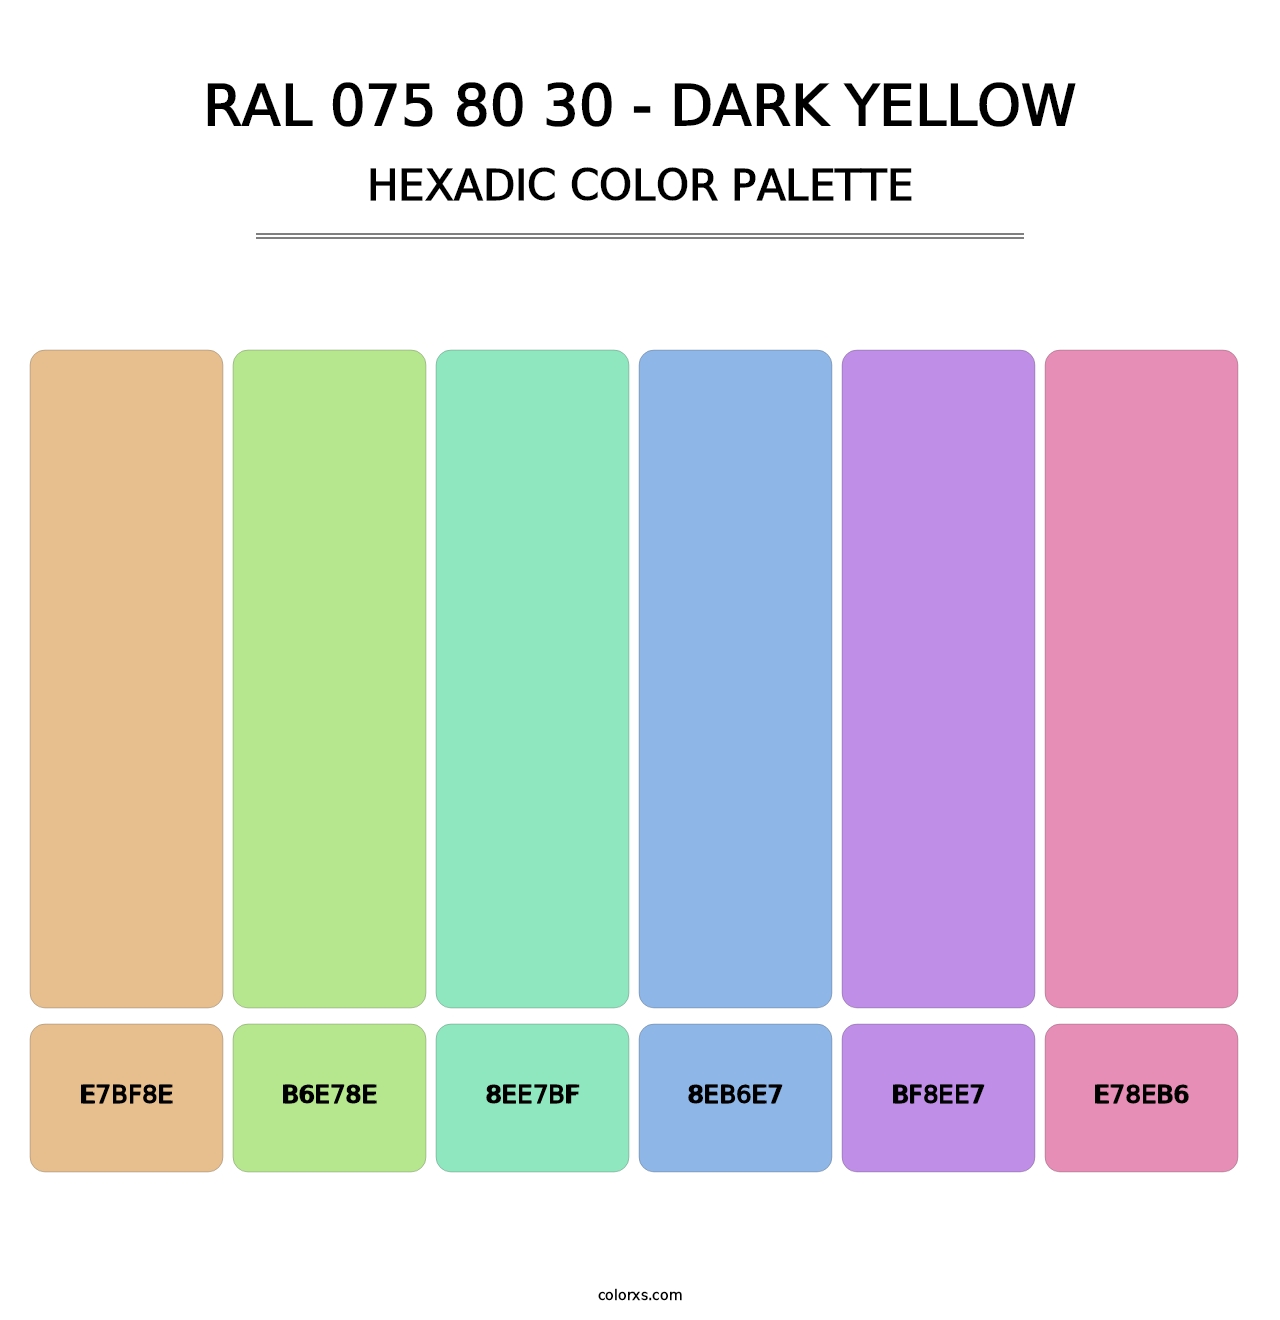 RAL 075 80 30 - Dark Yellow - Hexadic Color Palette